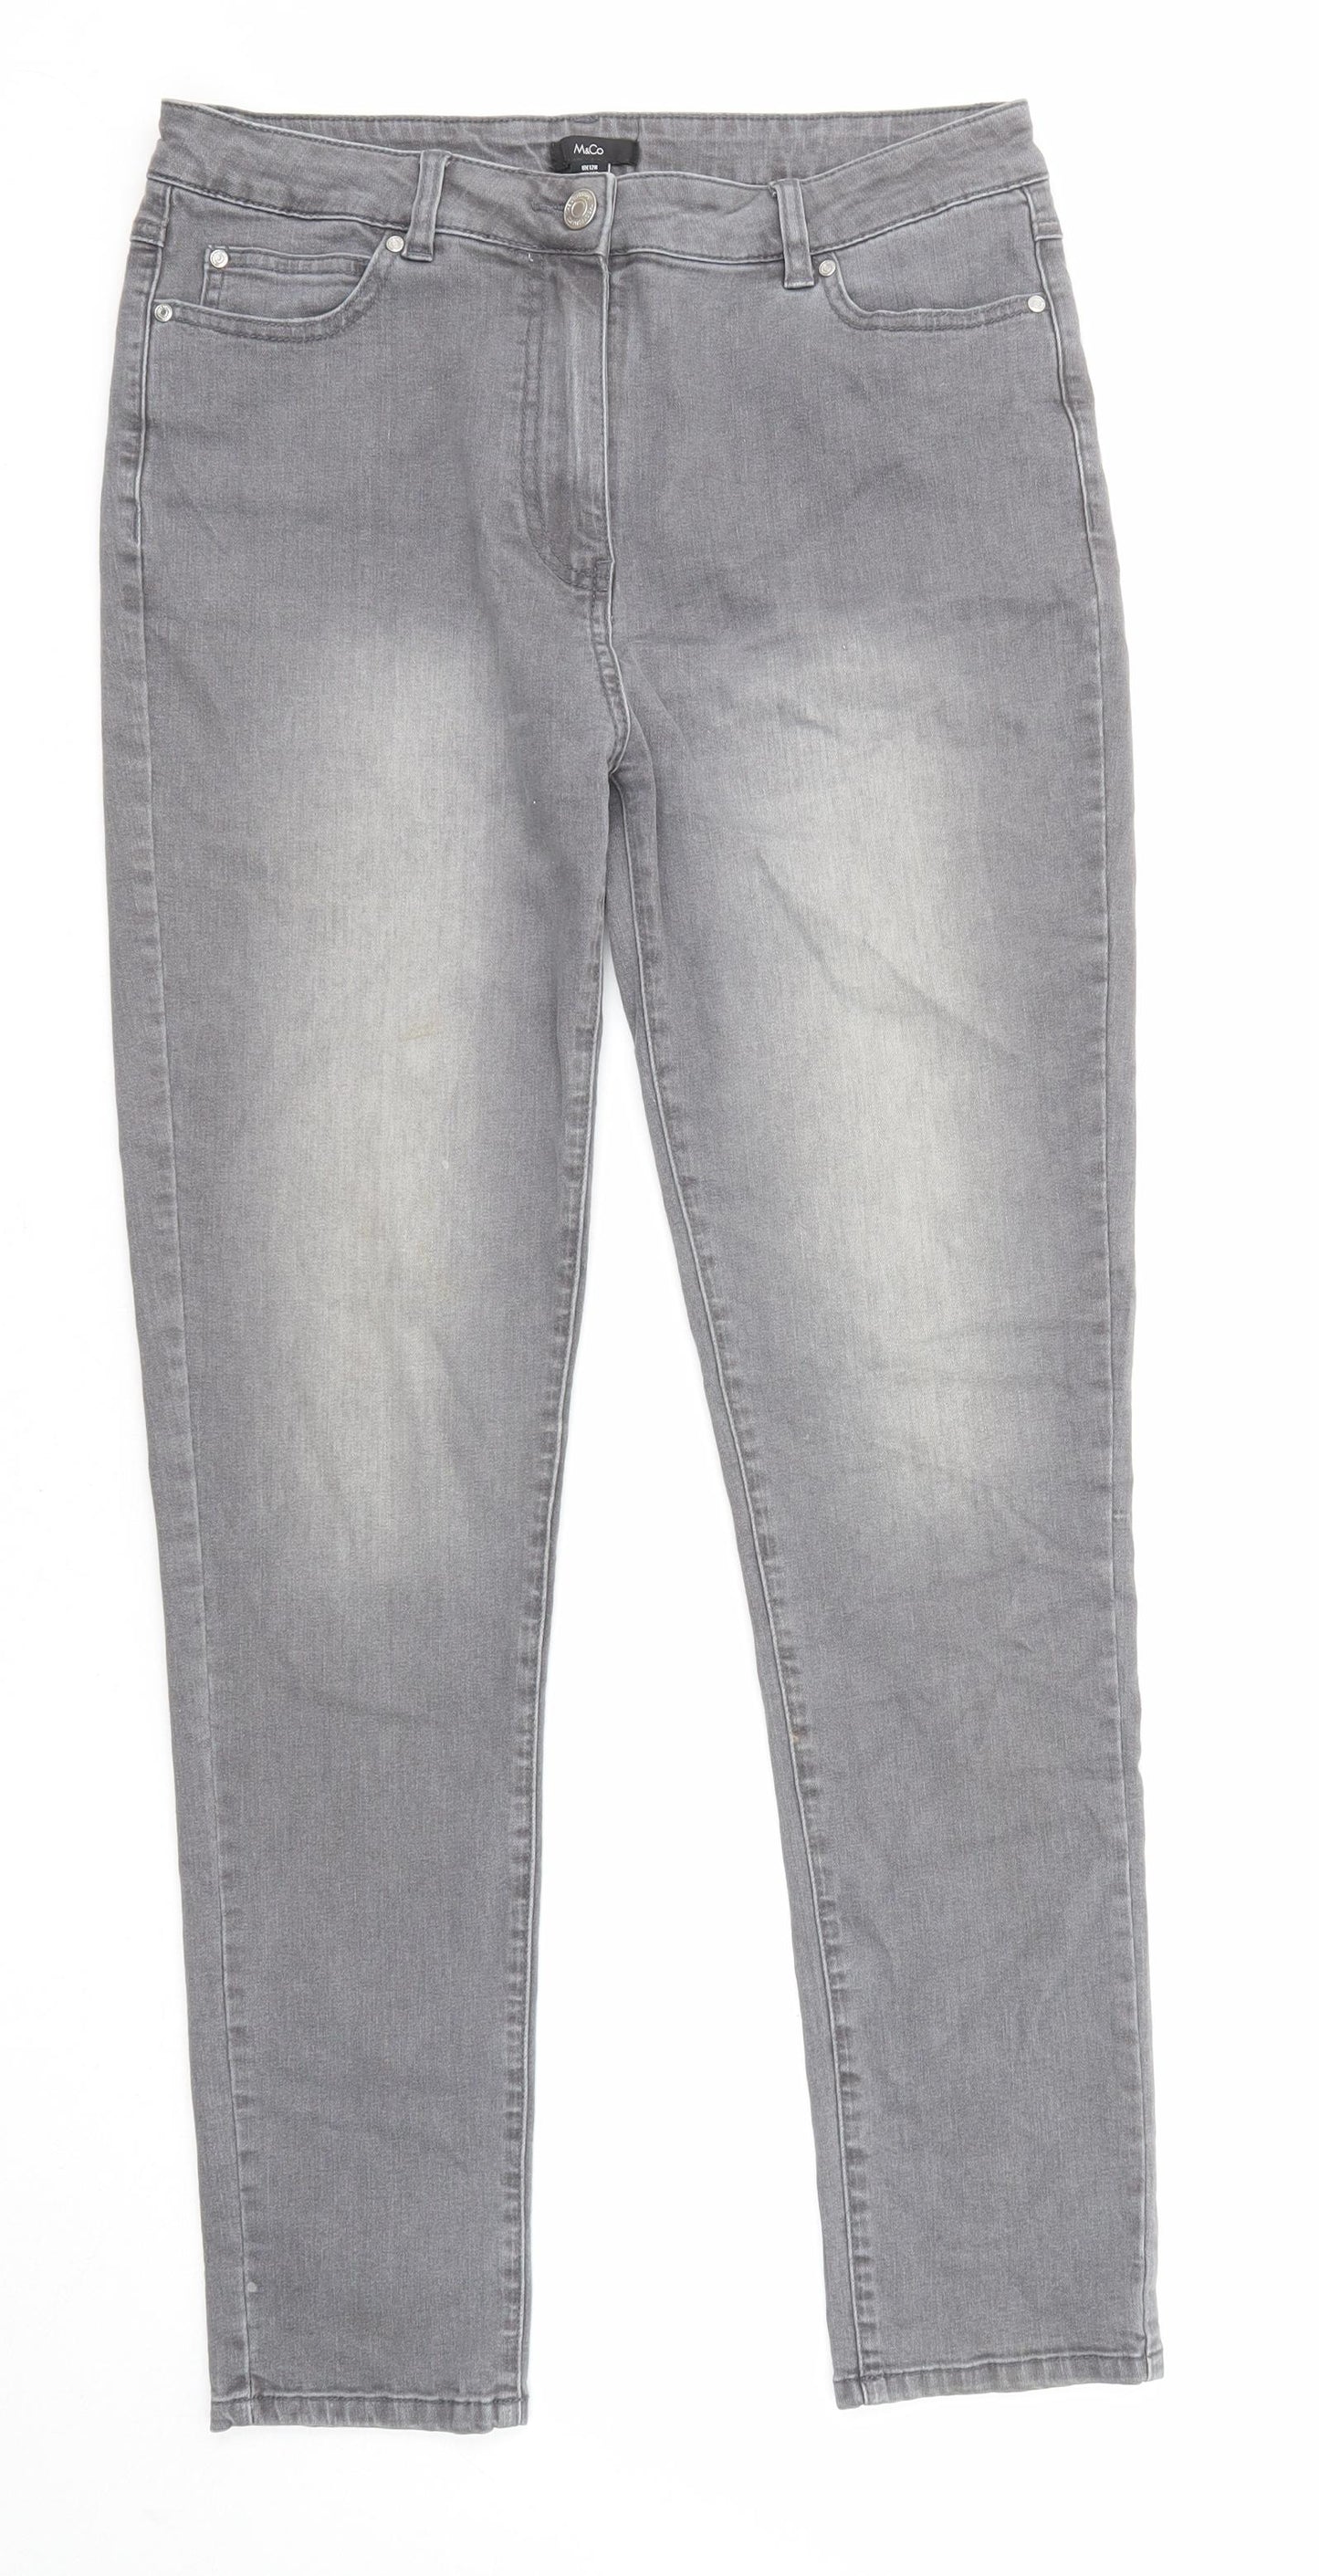 M&Co Womens Grey Cotton Skinny Jeans Size 12 L28 in Regular Zip